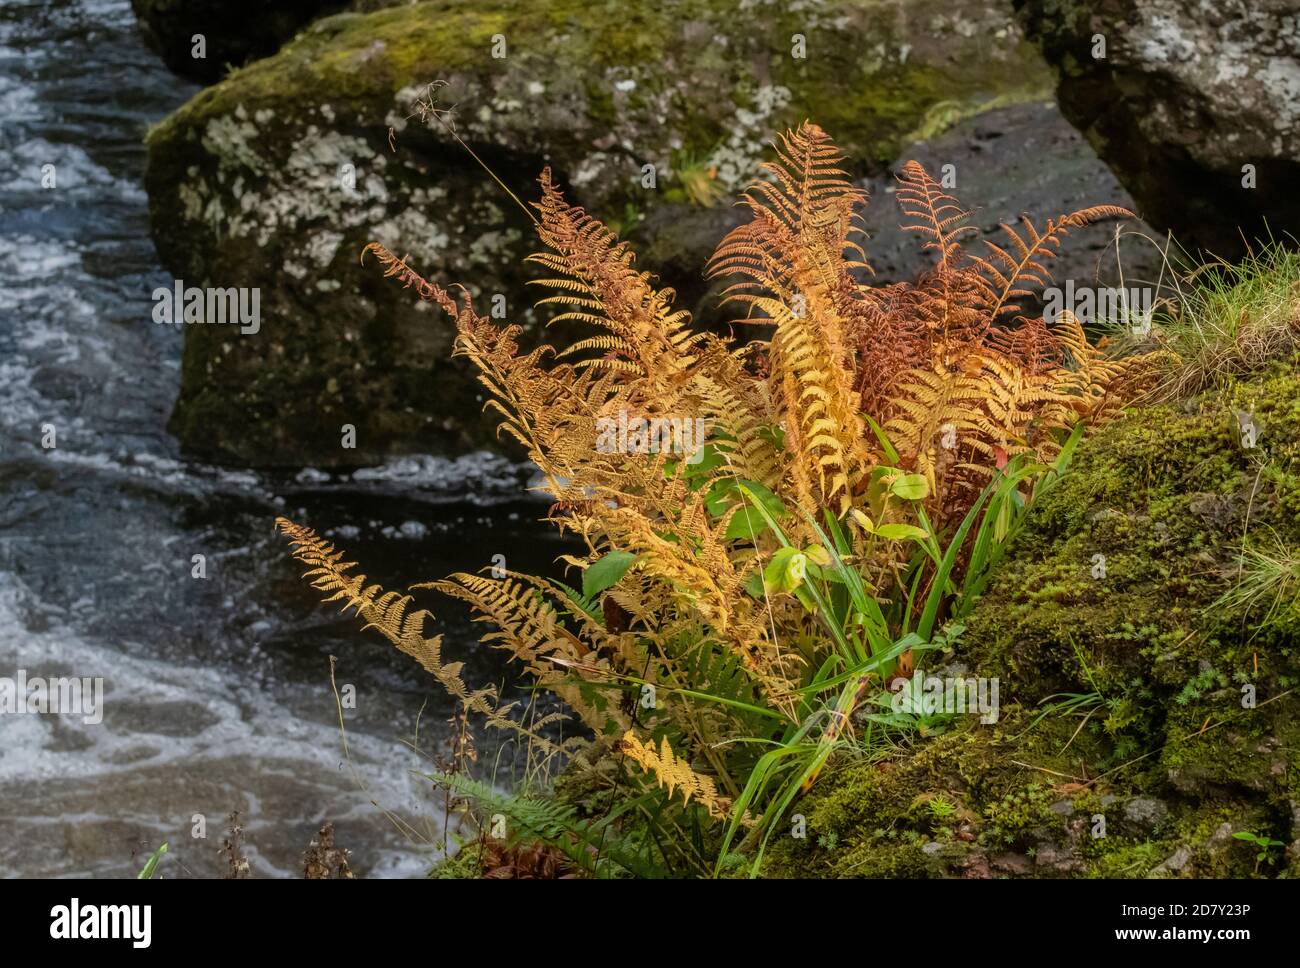 Lady fern, Athyrium filix-femina, with ripe sori in autumn, growing on riverbank, Scotland. Stock Photo